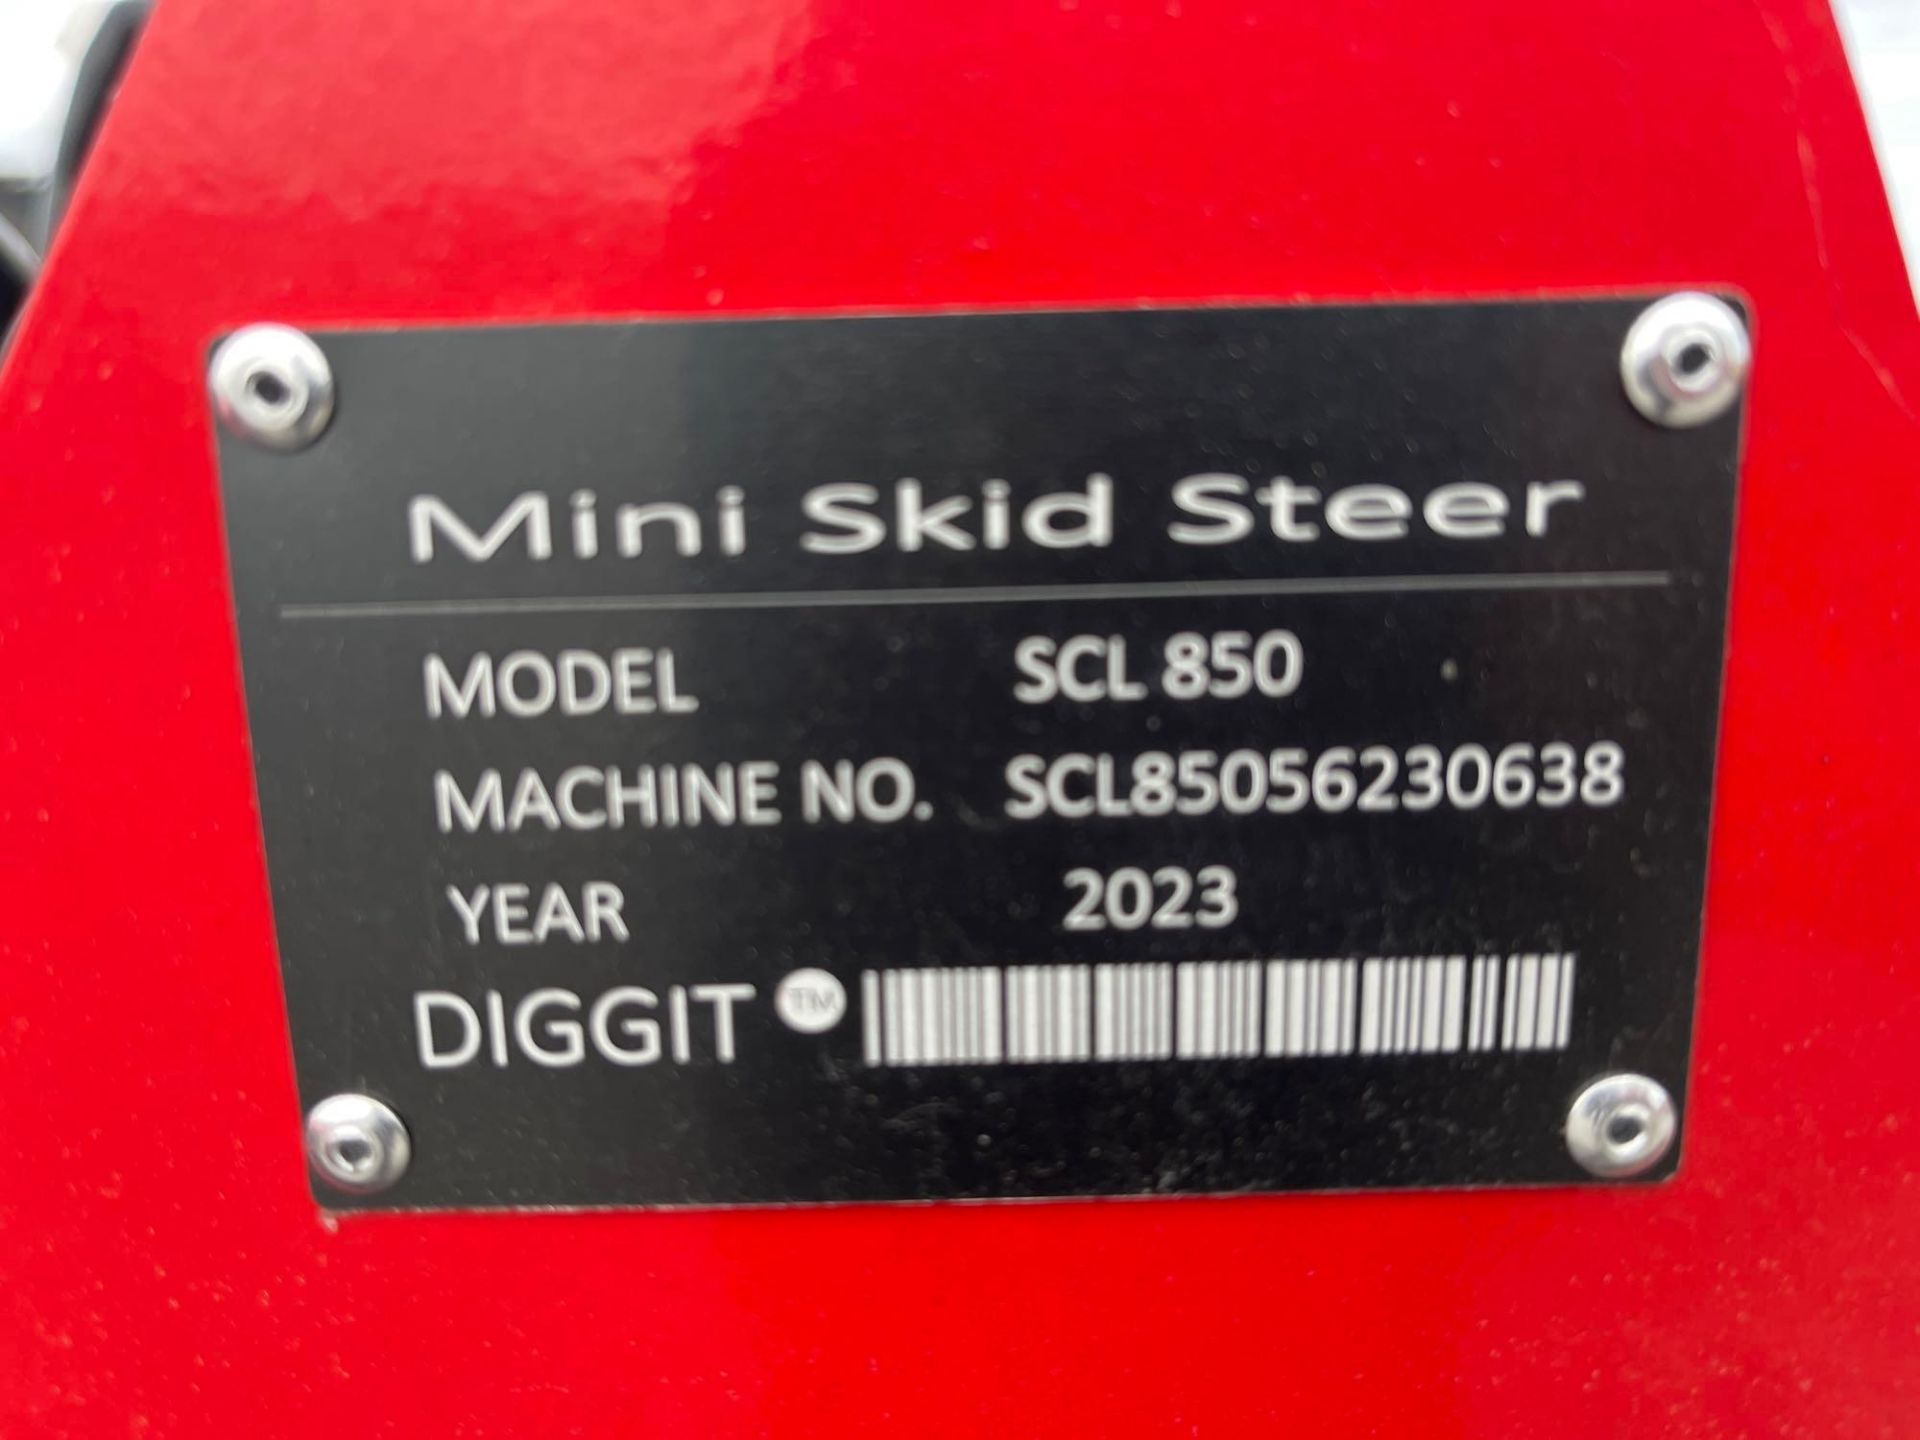 Diggit SCL850 Mini Skid Steer Loader - Image 5 of 16